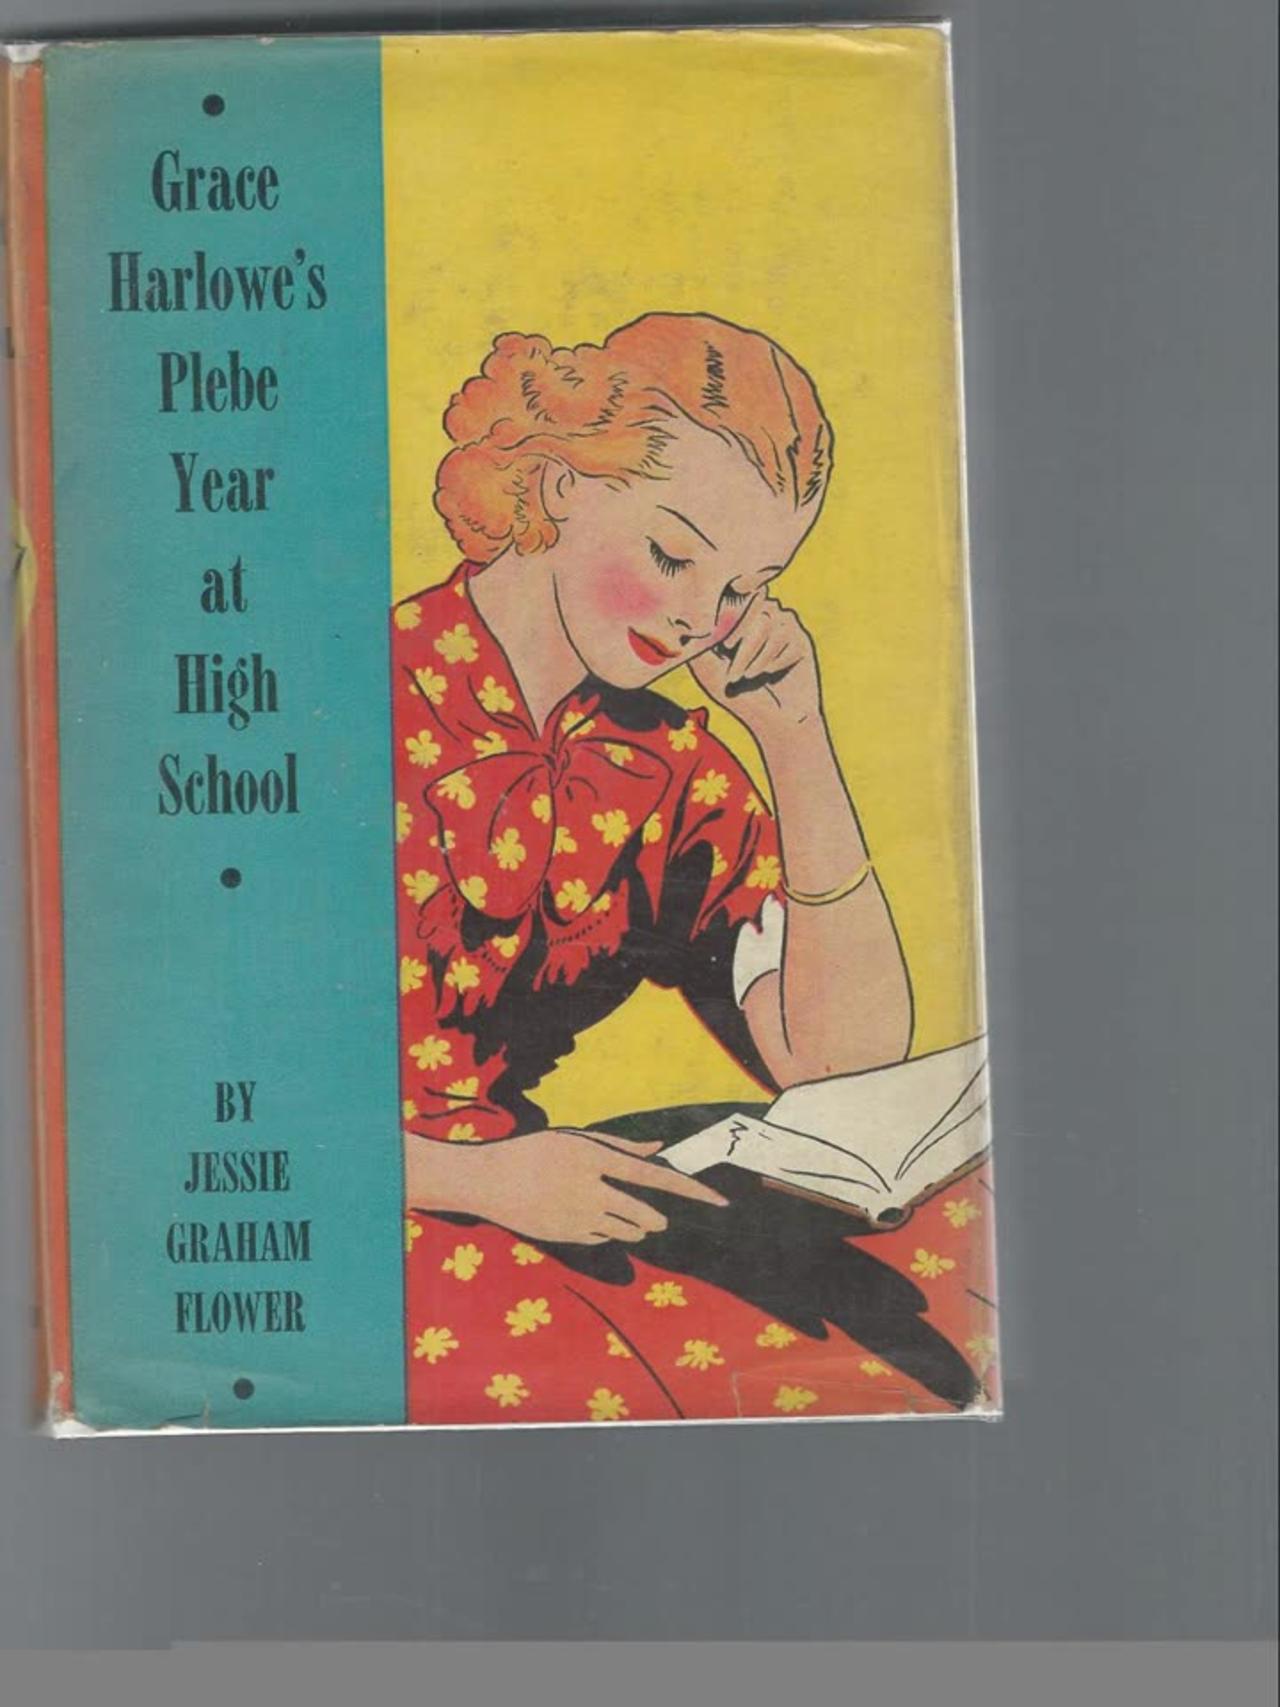 Grace Harlowe's Plebe Year at High School By: Jessie Graham